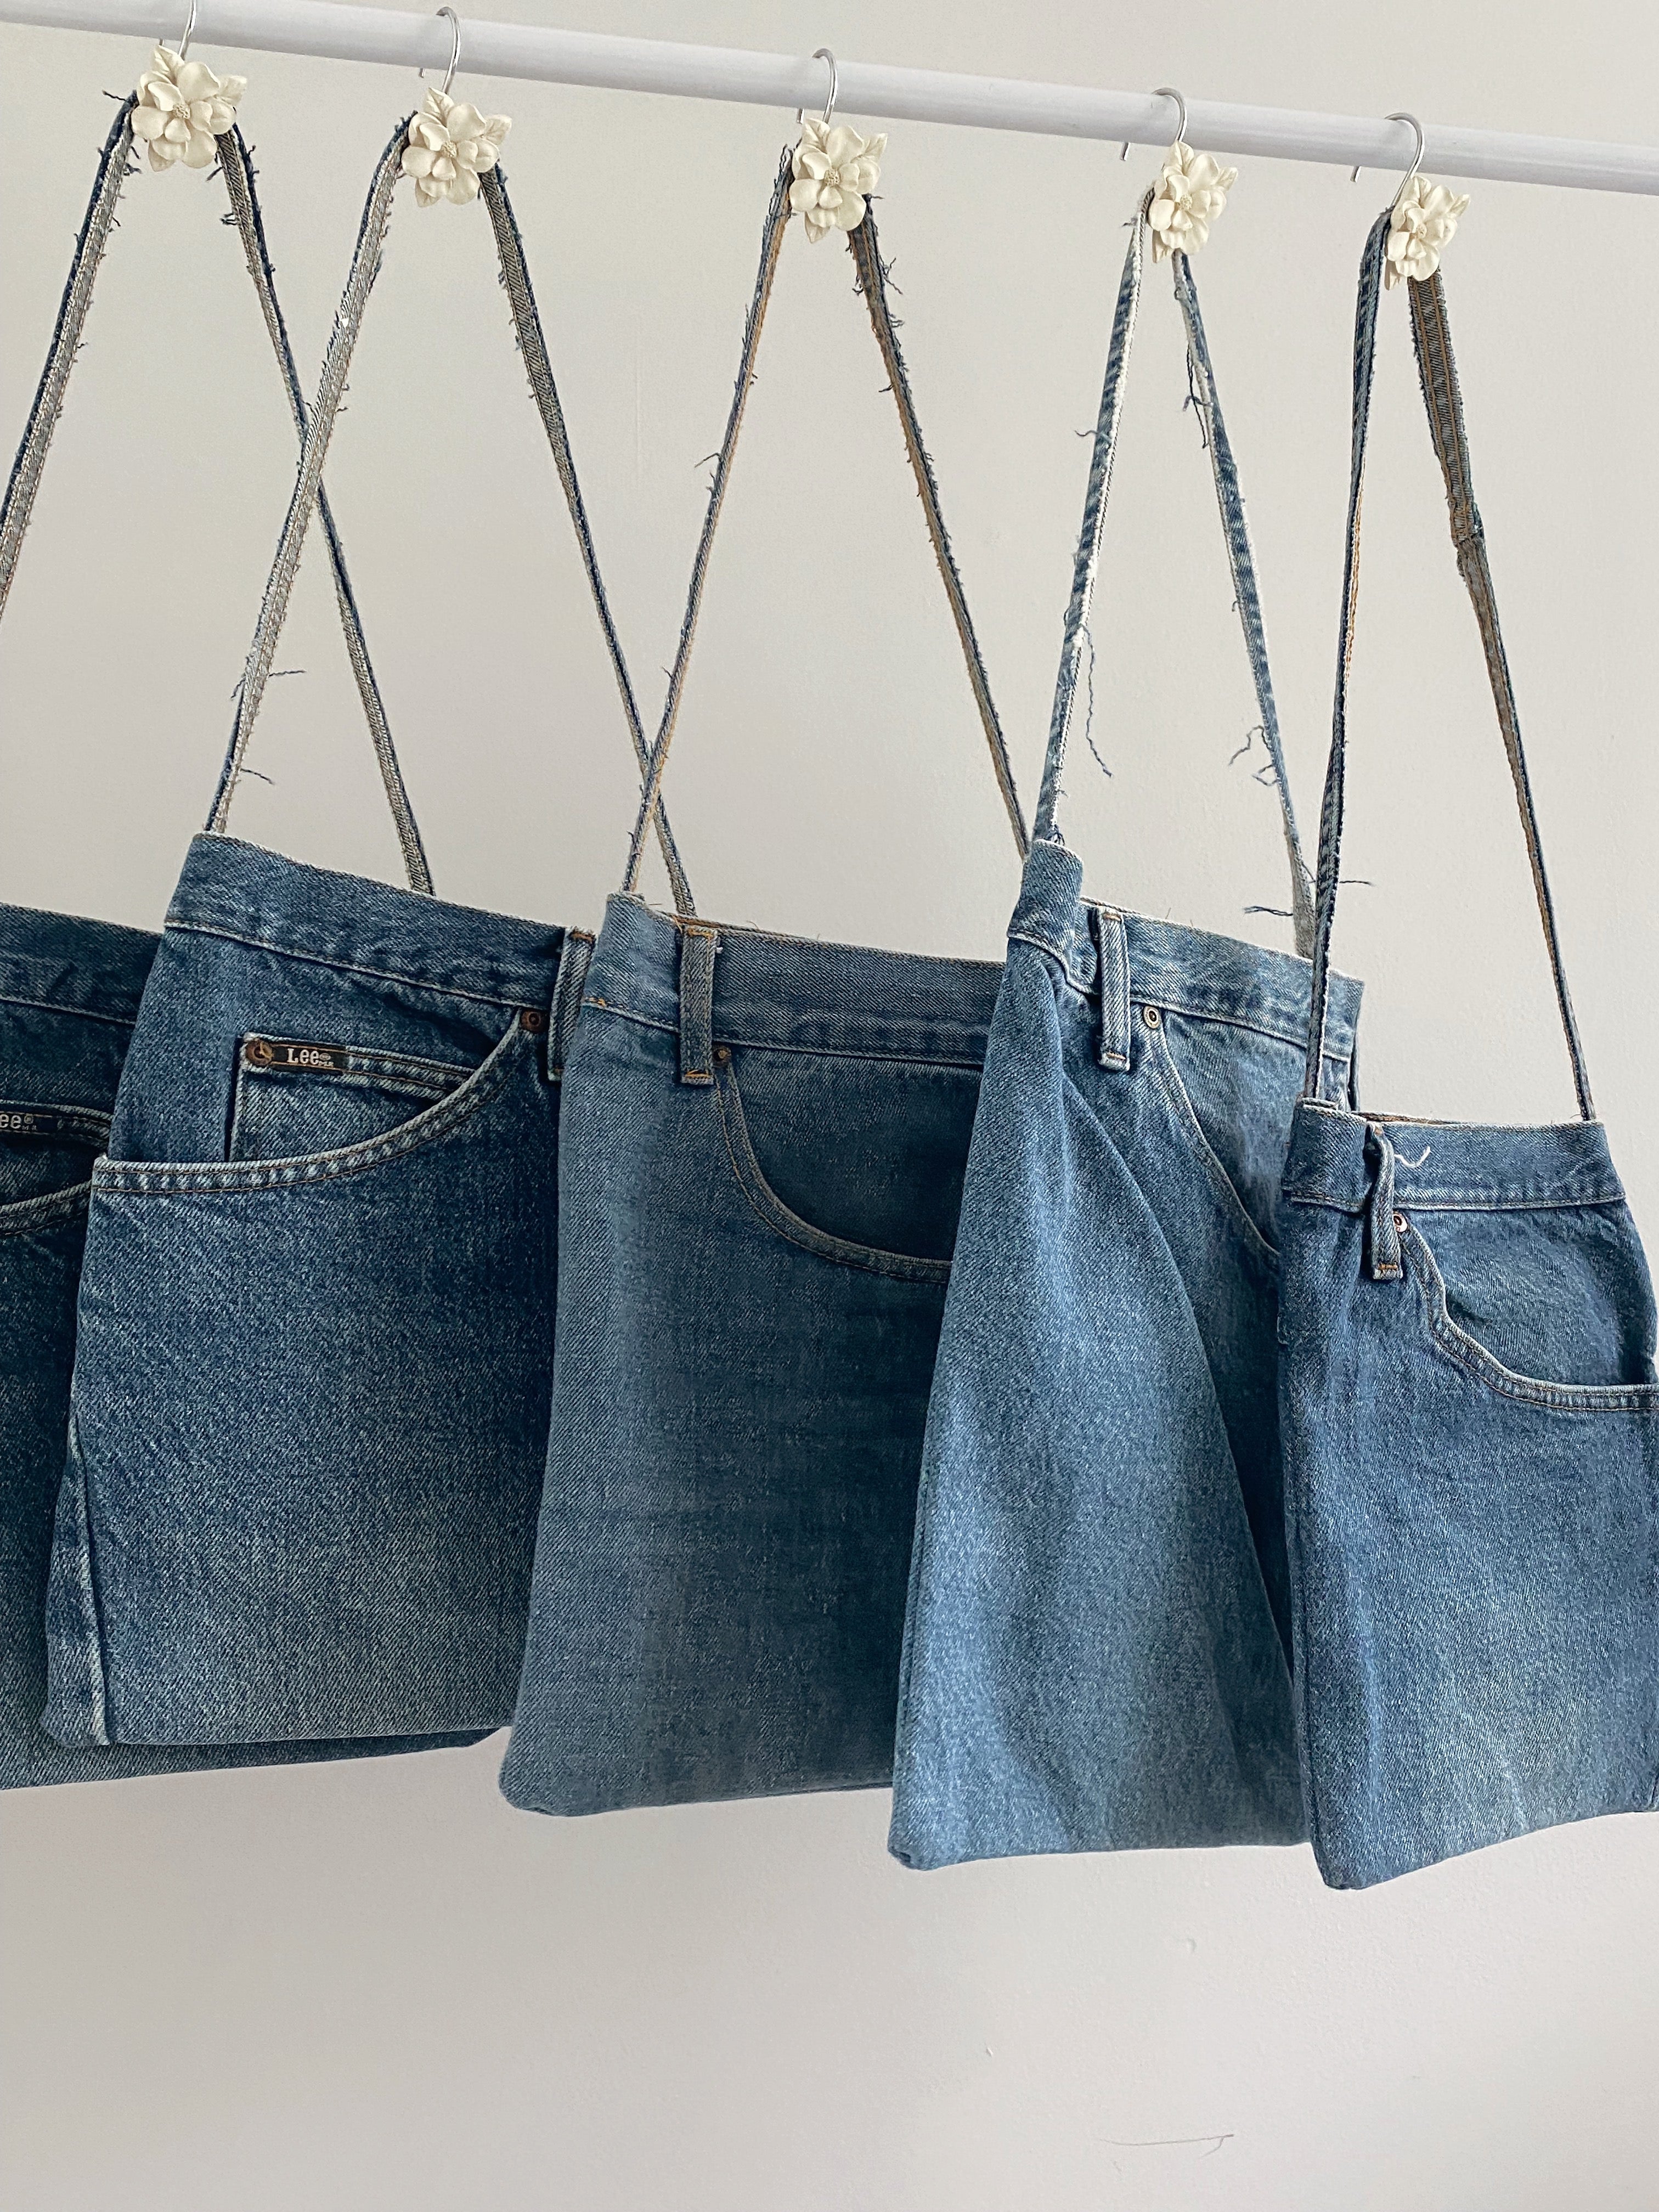 Kawachi Light Weight Soft Denim Jeans Bag Shoulder Multipurpose Shopping  Tote Handbag K478